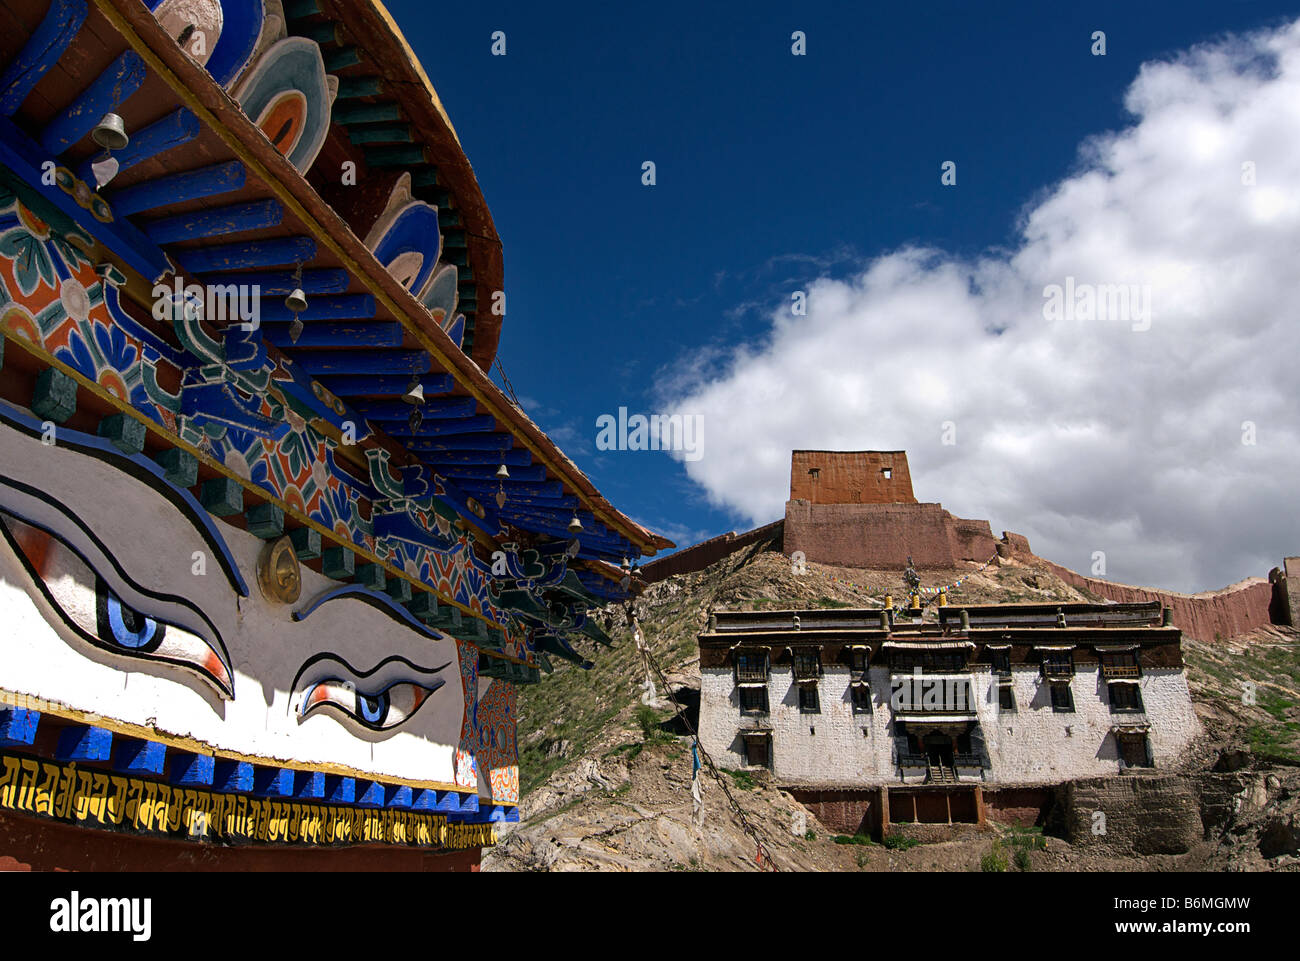 All-seeing eyes adorning and protecting a wall. Kumbum Pelkor Chöde monastery, Gyantse, Tibet Stock Photo